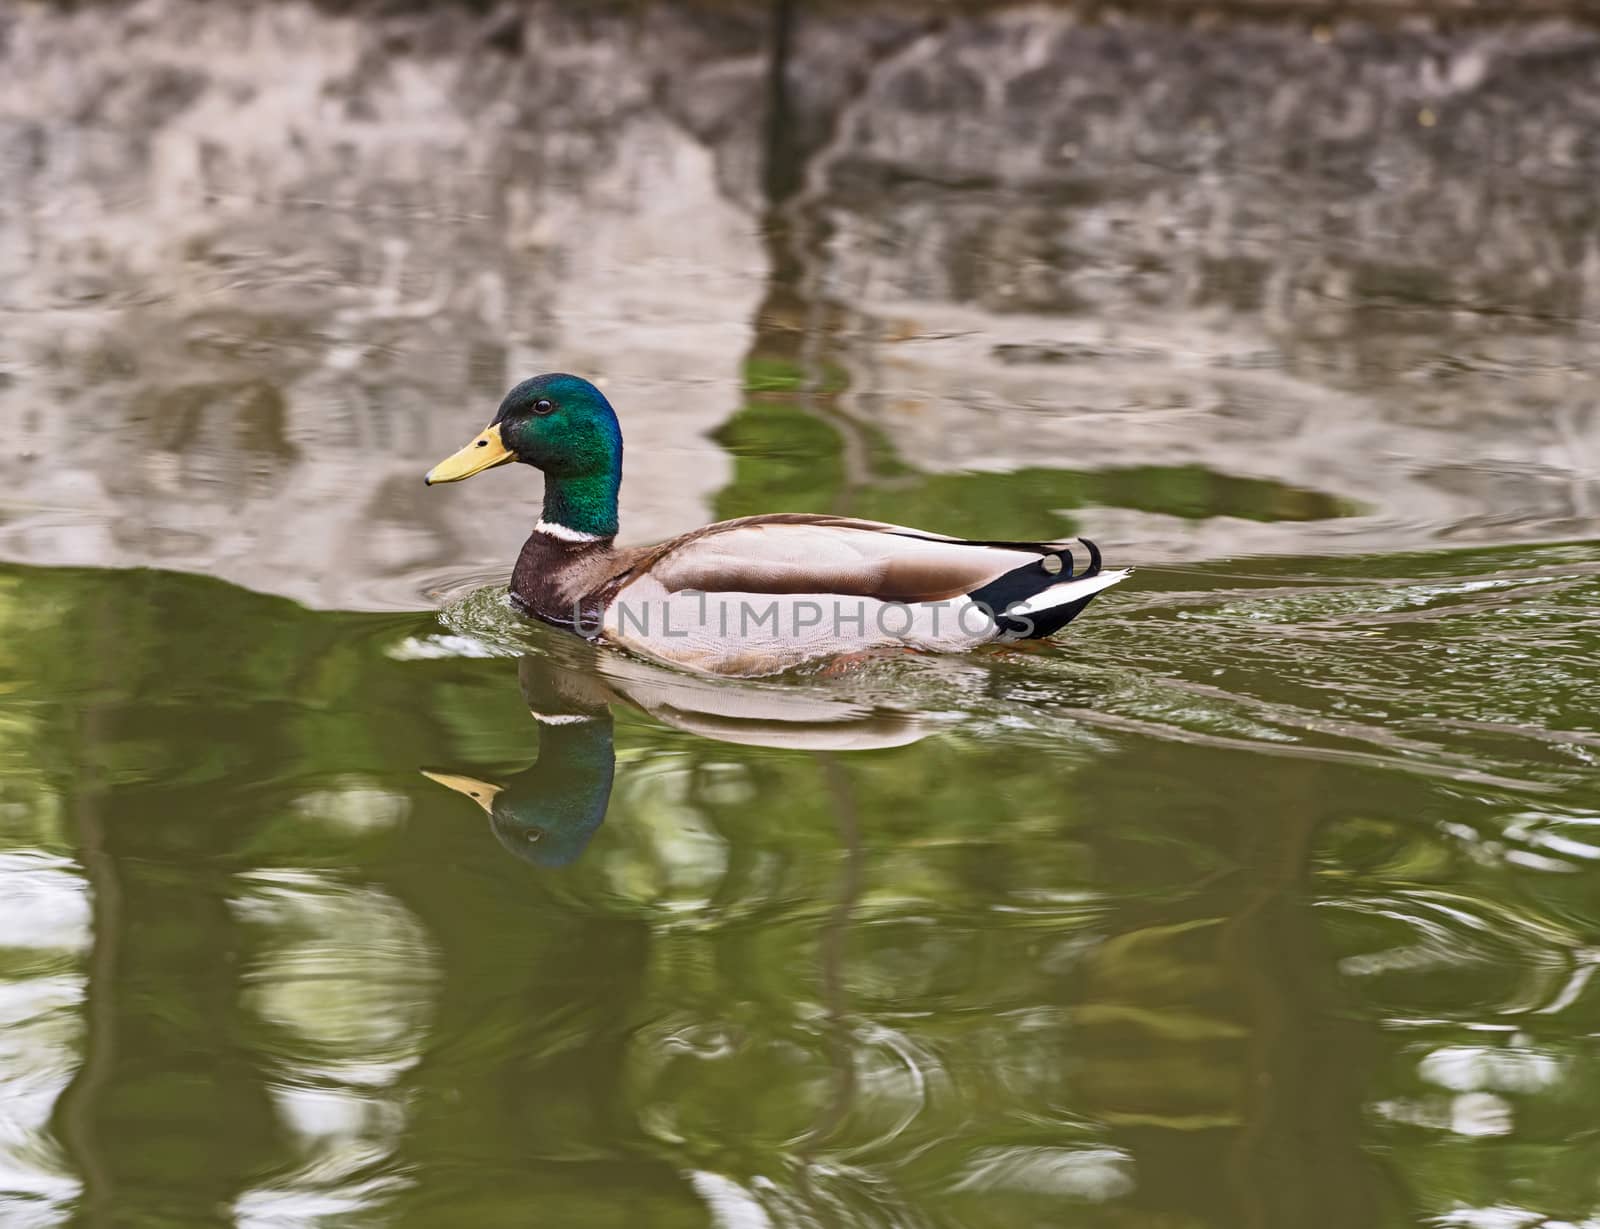 mallard duck swimming in a lake by Marcus